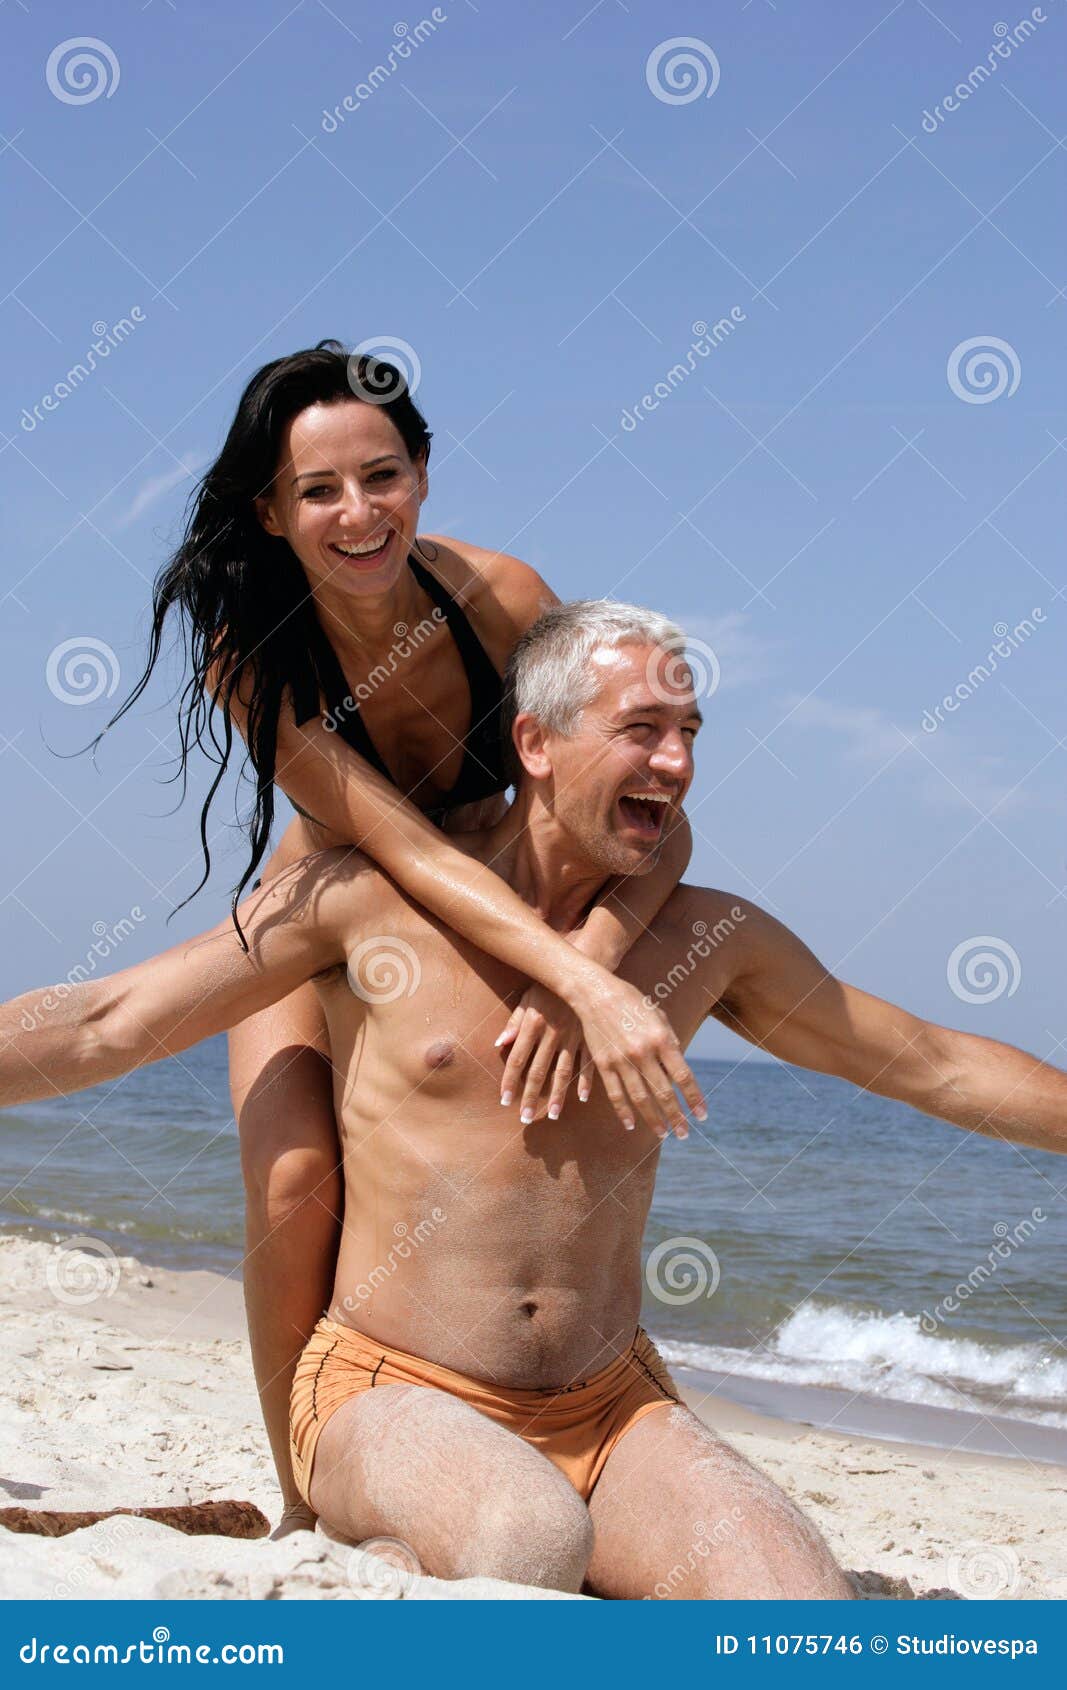 celina paulin castaneda recommends senior naturist couples pic